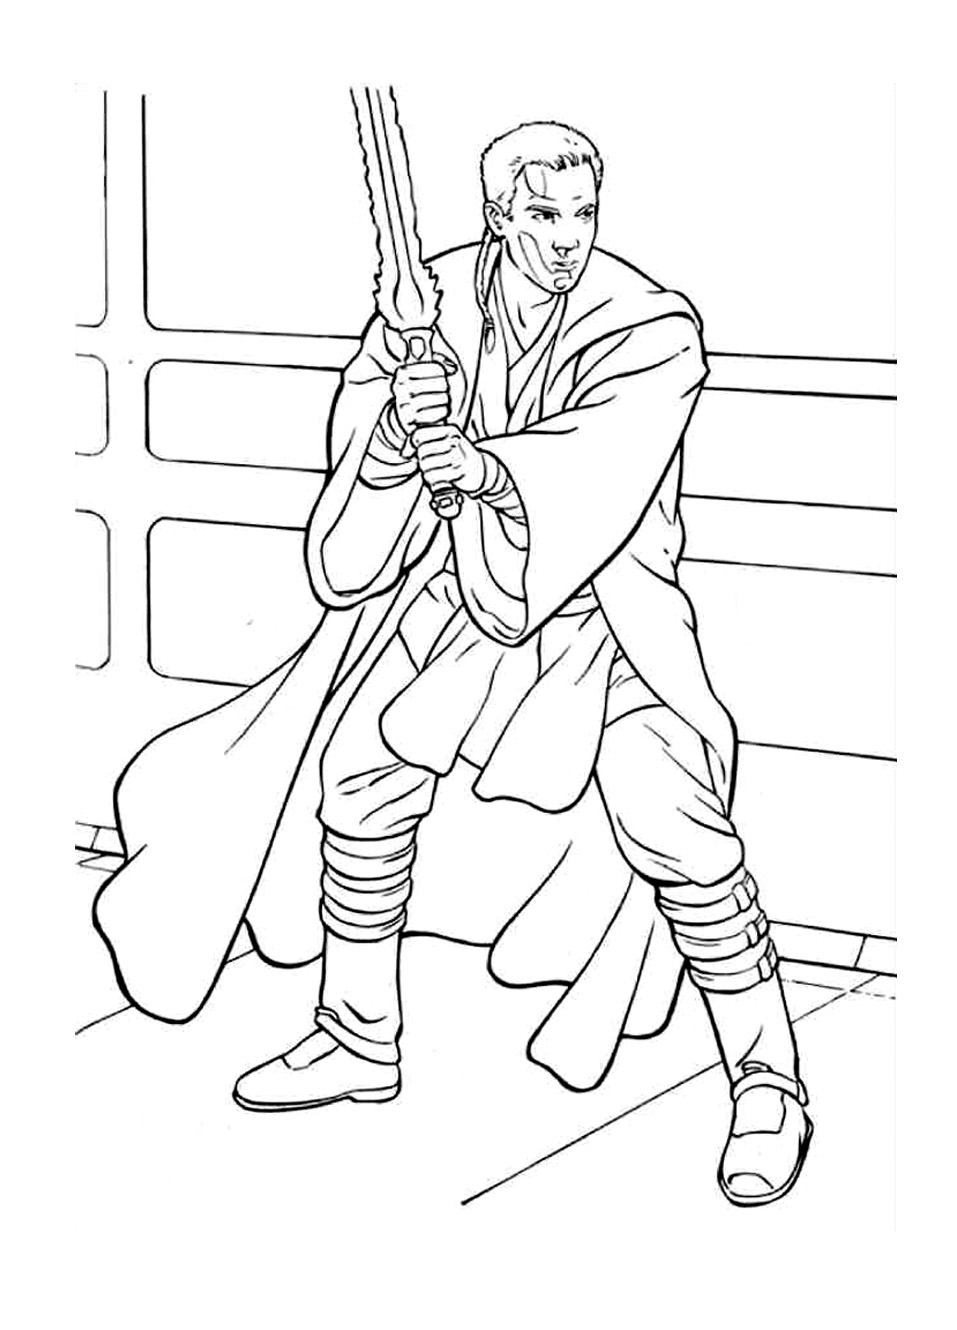 Star Wars Coloring Pages Obi Wan at GetColorings.com | Free printable ...